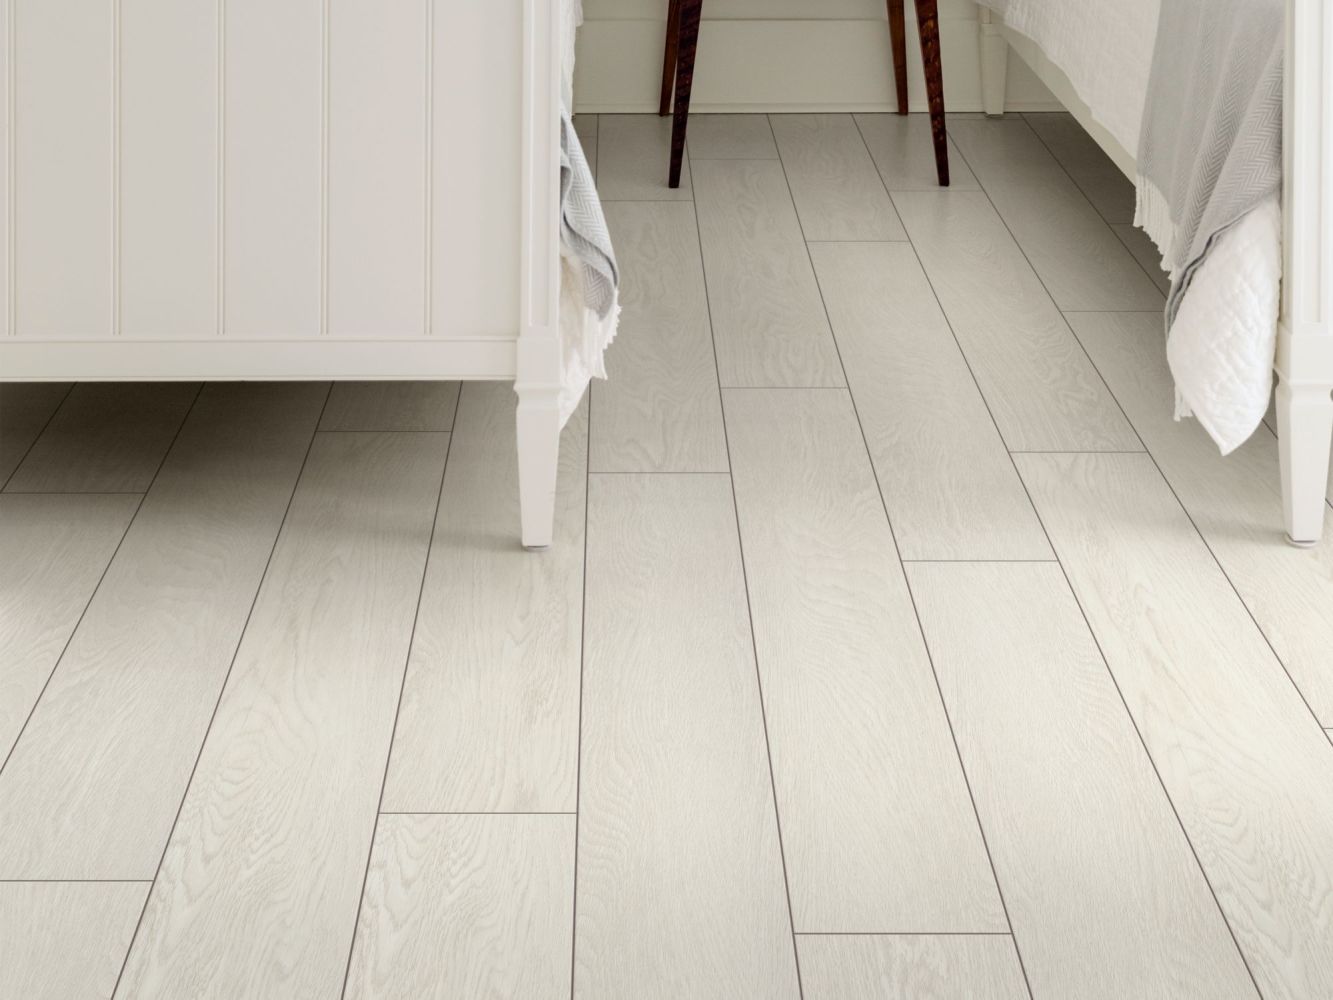 Shaw Floors Resilient Residential Distinction Plus Flawless Oak 01094_2045V